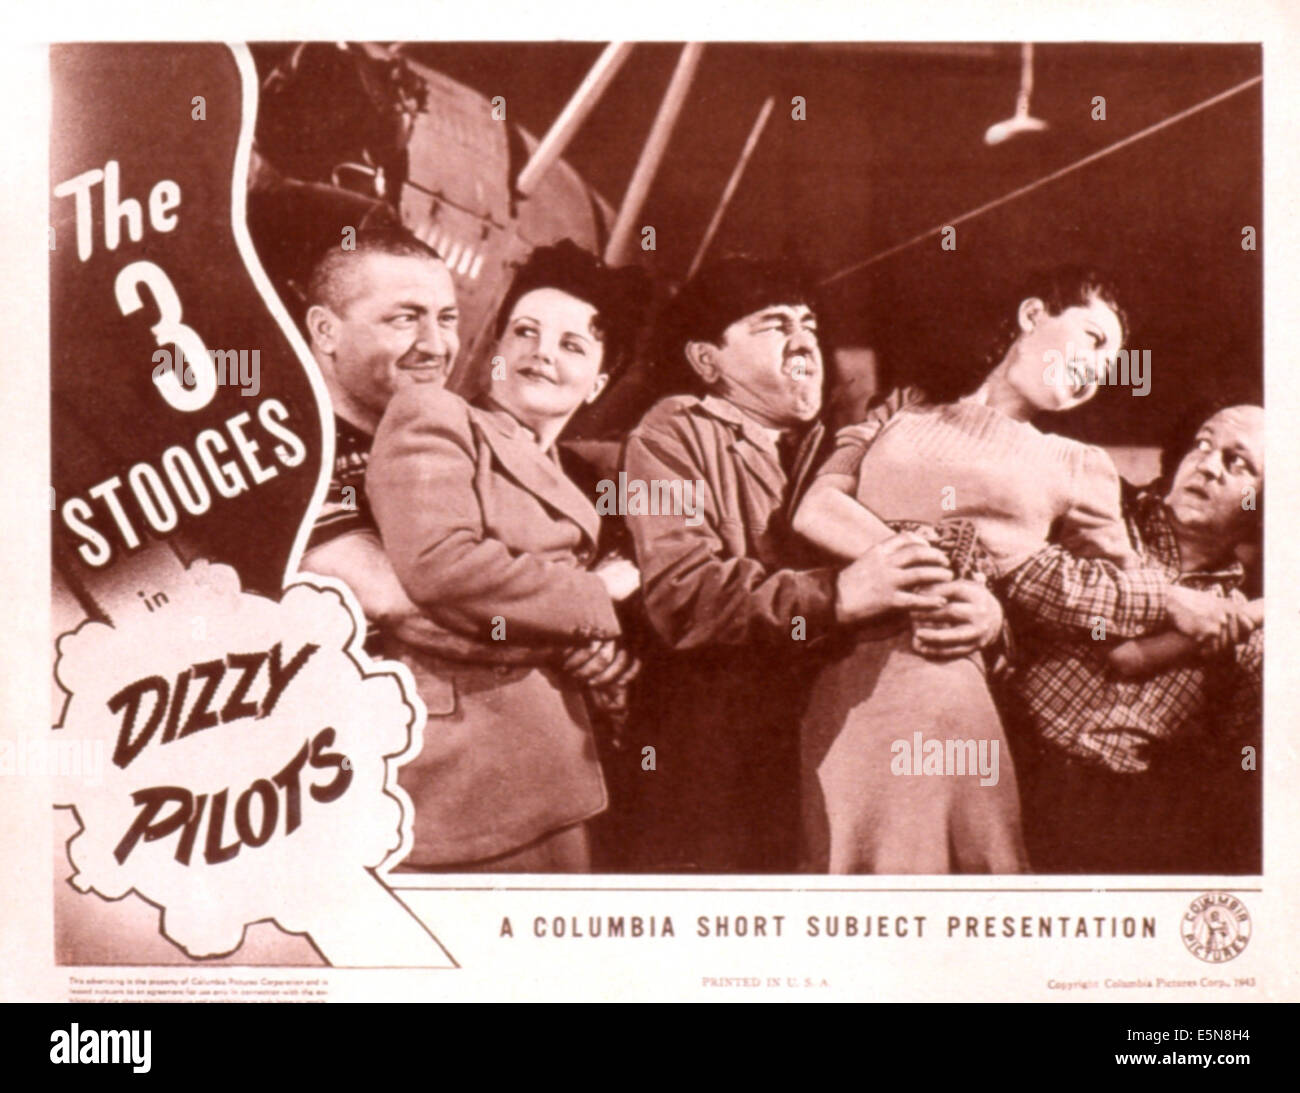 DIZZY PILOTS, Curly Howard, Judy Malcolm, Moe Howard, Sethma Williams, Larry Fine (The Three Stooges), 1943 Stock Photo